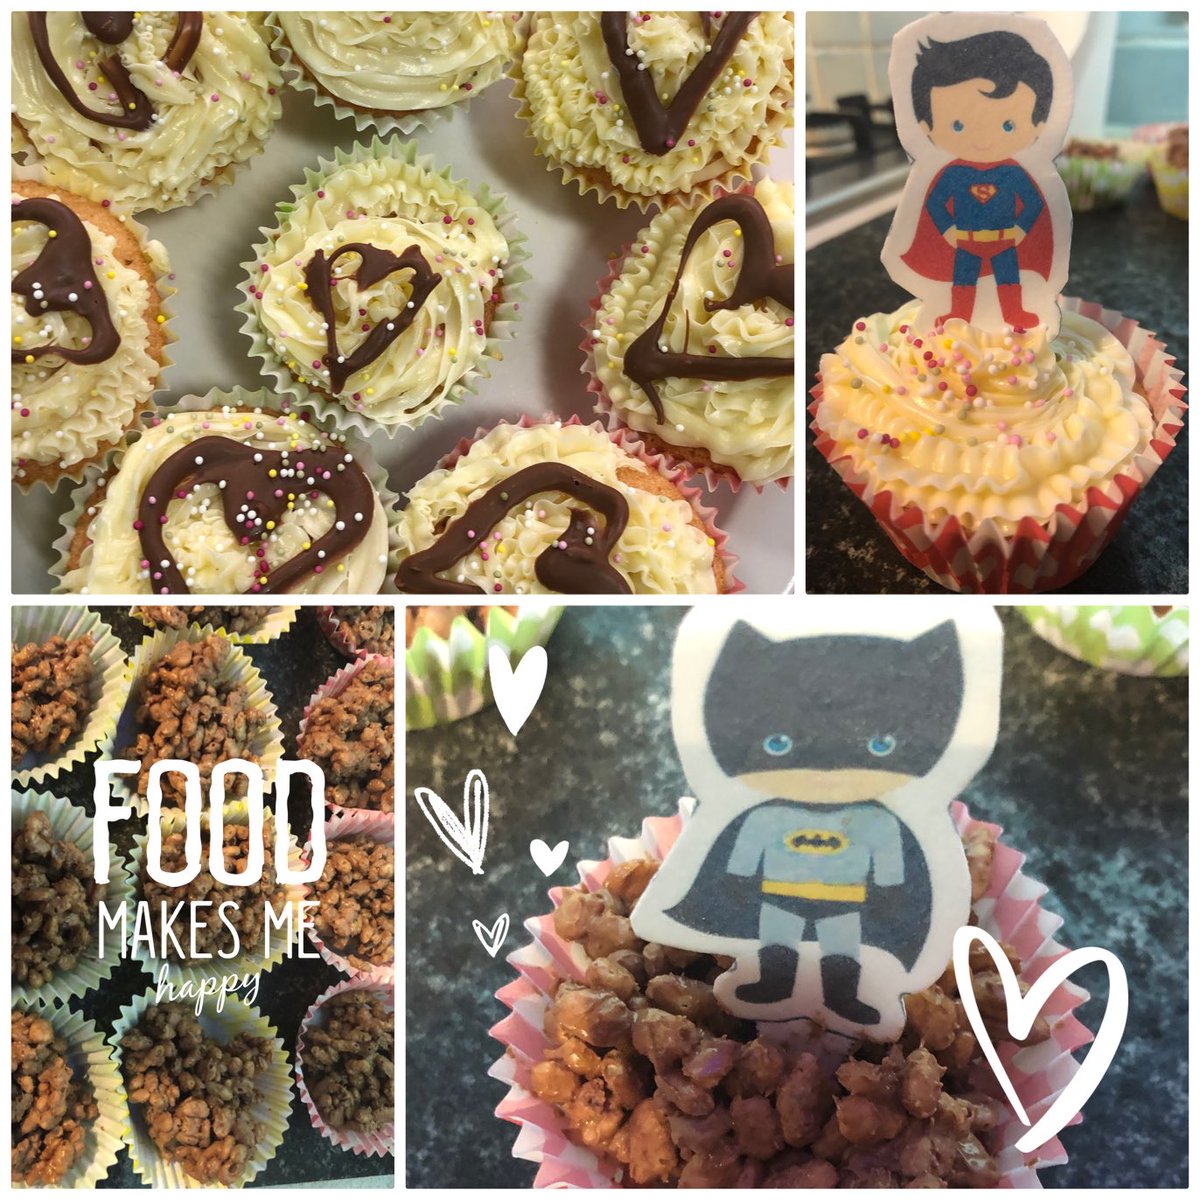 I got my baking skills on today for #mcmillancoffeemorning at work today ⁦@Bank_Partners⁩  #nomnom #chocolatehearts #vanillacupcakes #homemade